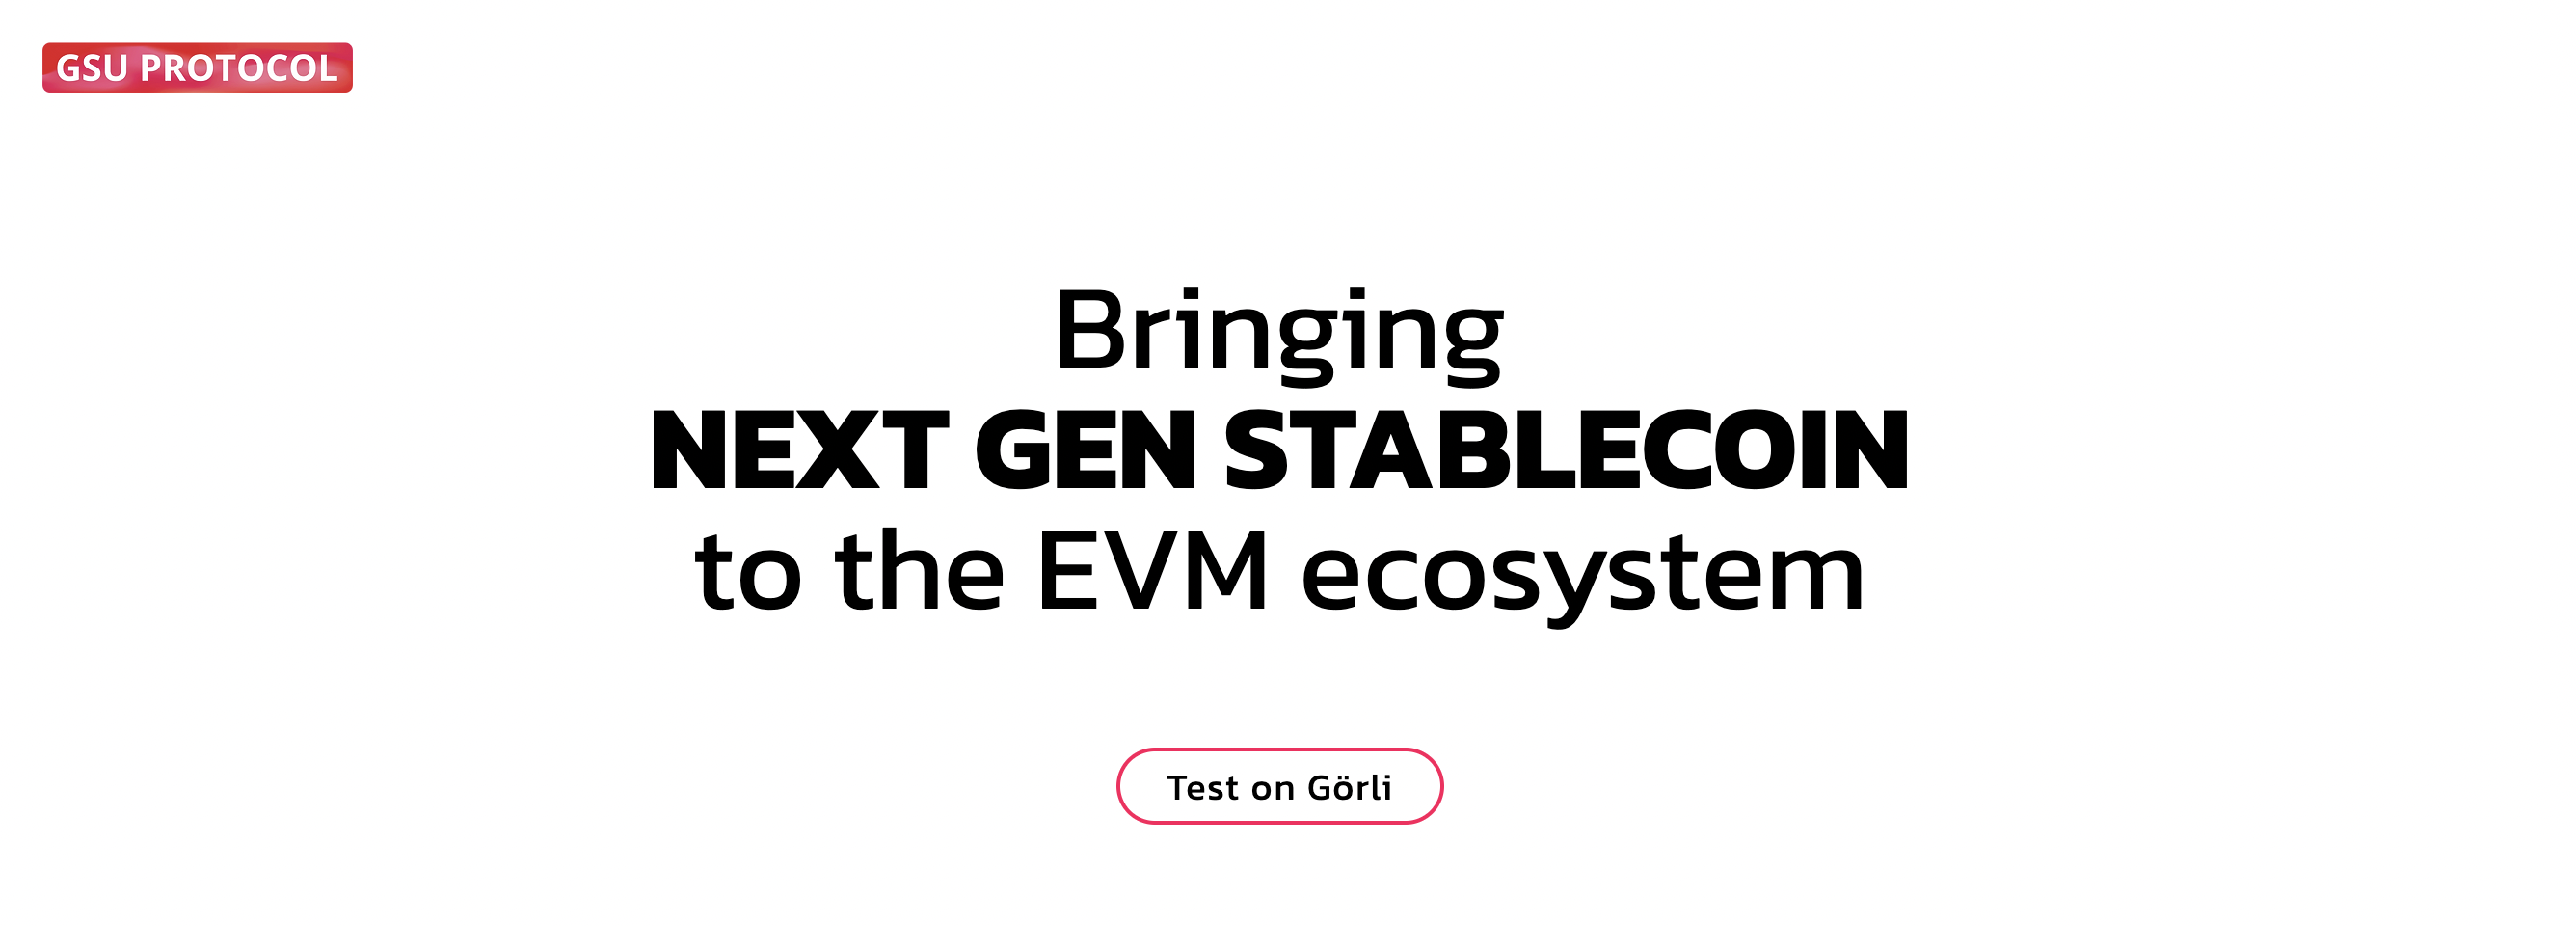 Bringing the Next Gen Stablecoin to EVM